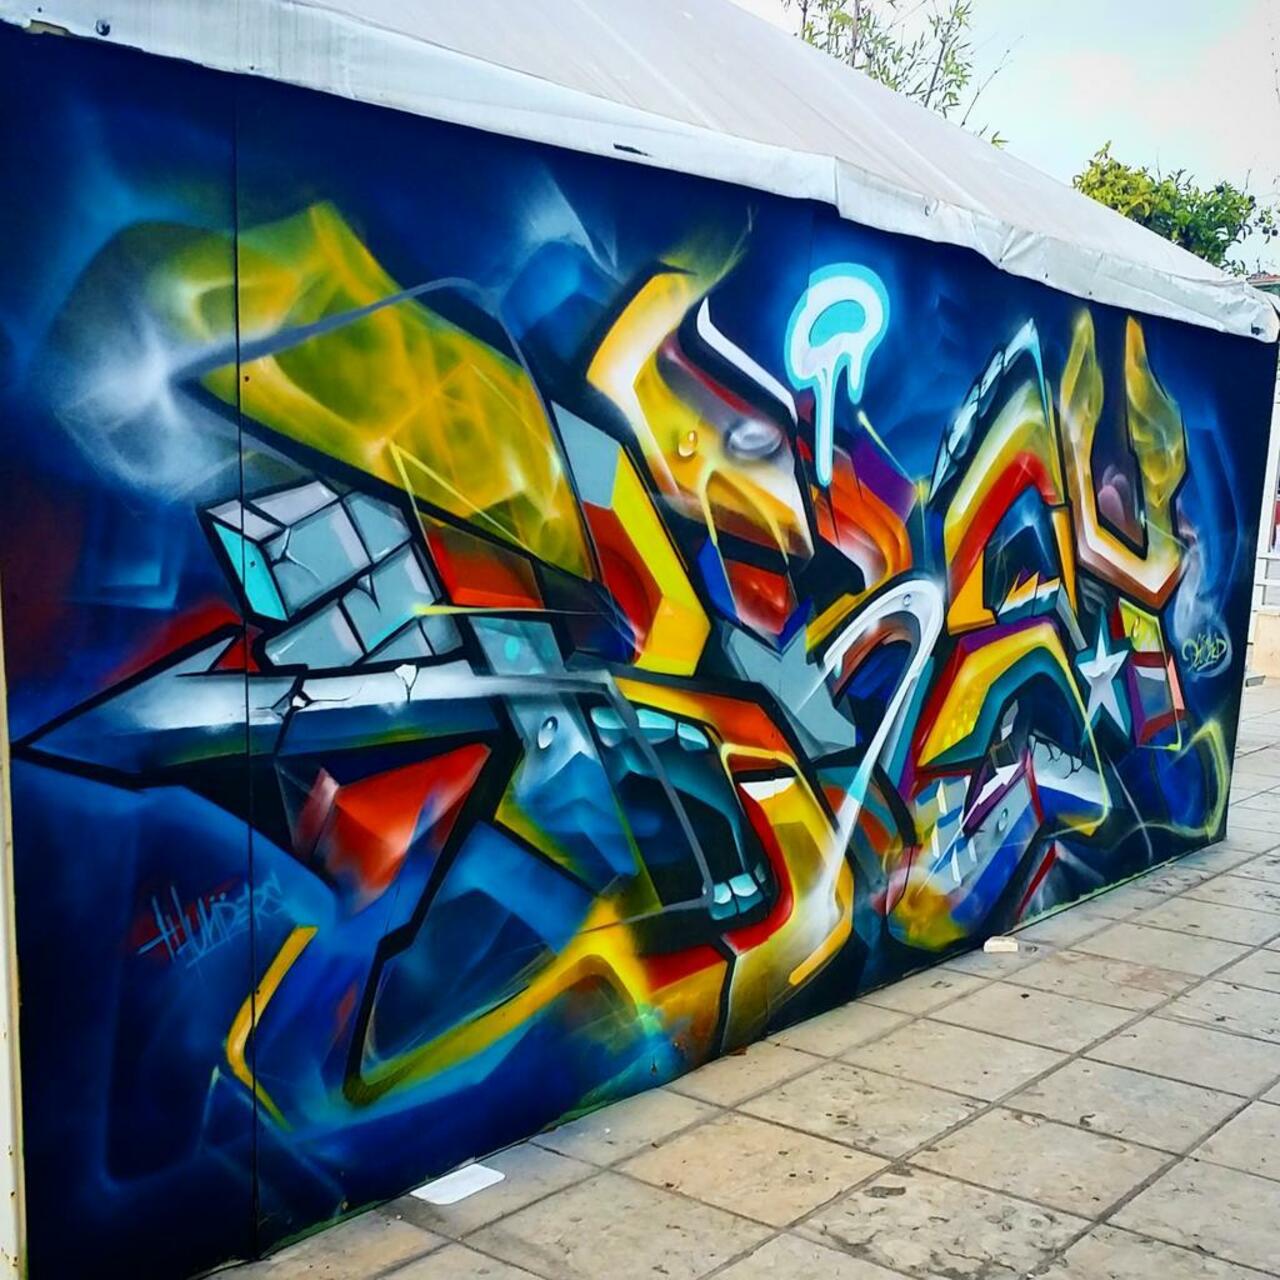 Amazing piece from the amazing city of Lisbon! #streetart #graff #graffiti #spraypaint #sprayart #art #paint #colour http://t.co/nihpMYf6ve